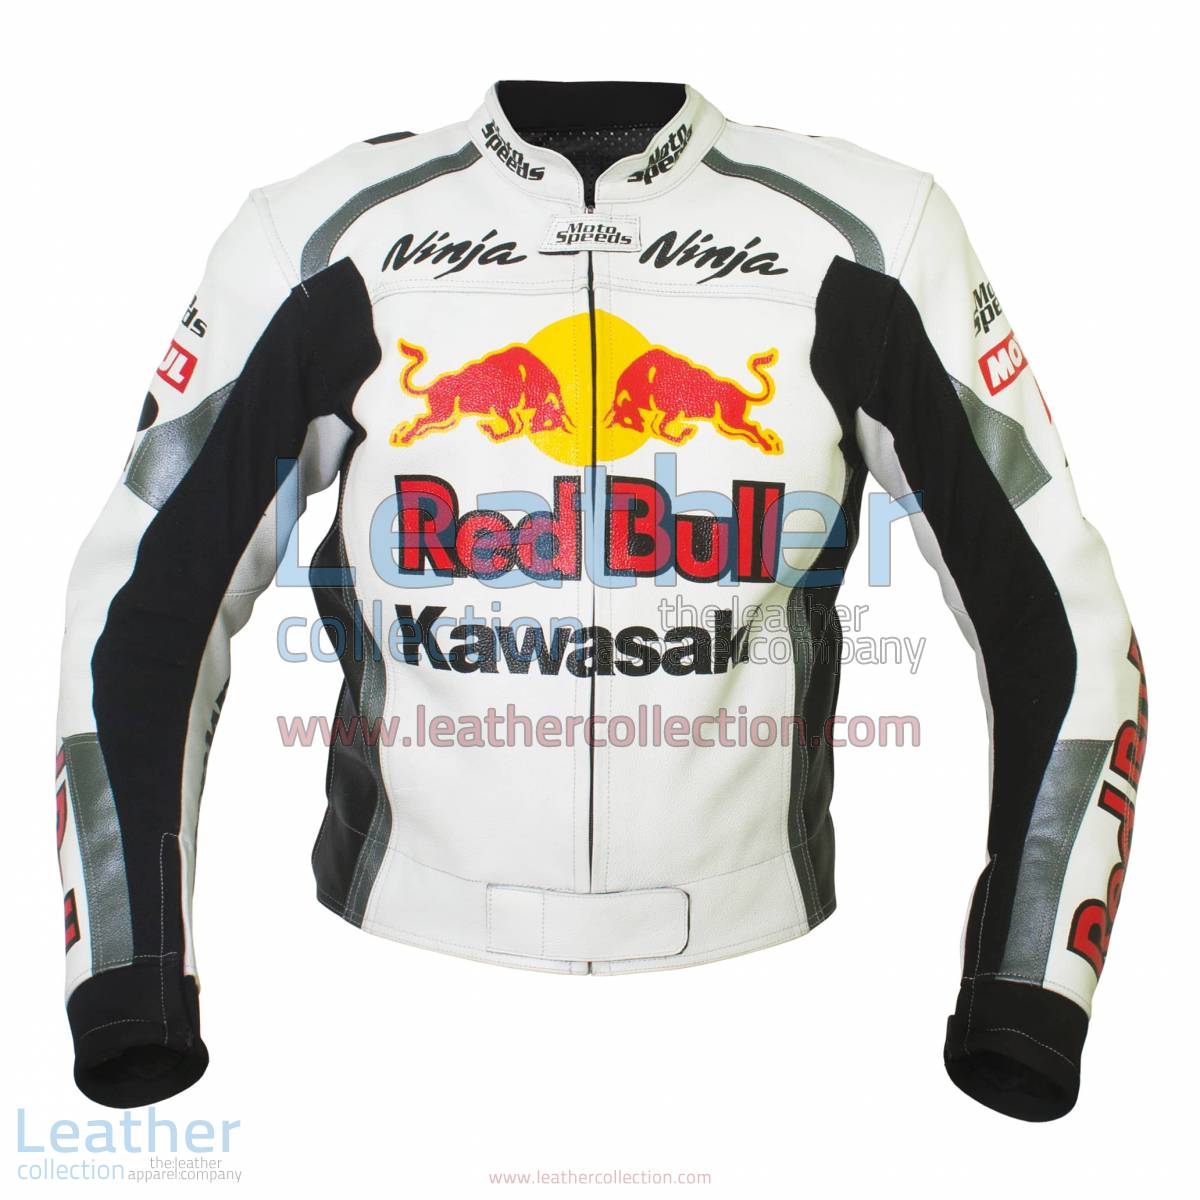 Kawasaki Ninja Red Bull Motorbike Leather Jacket